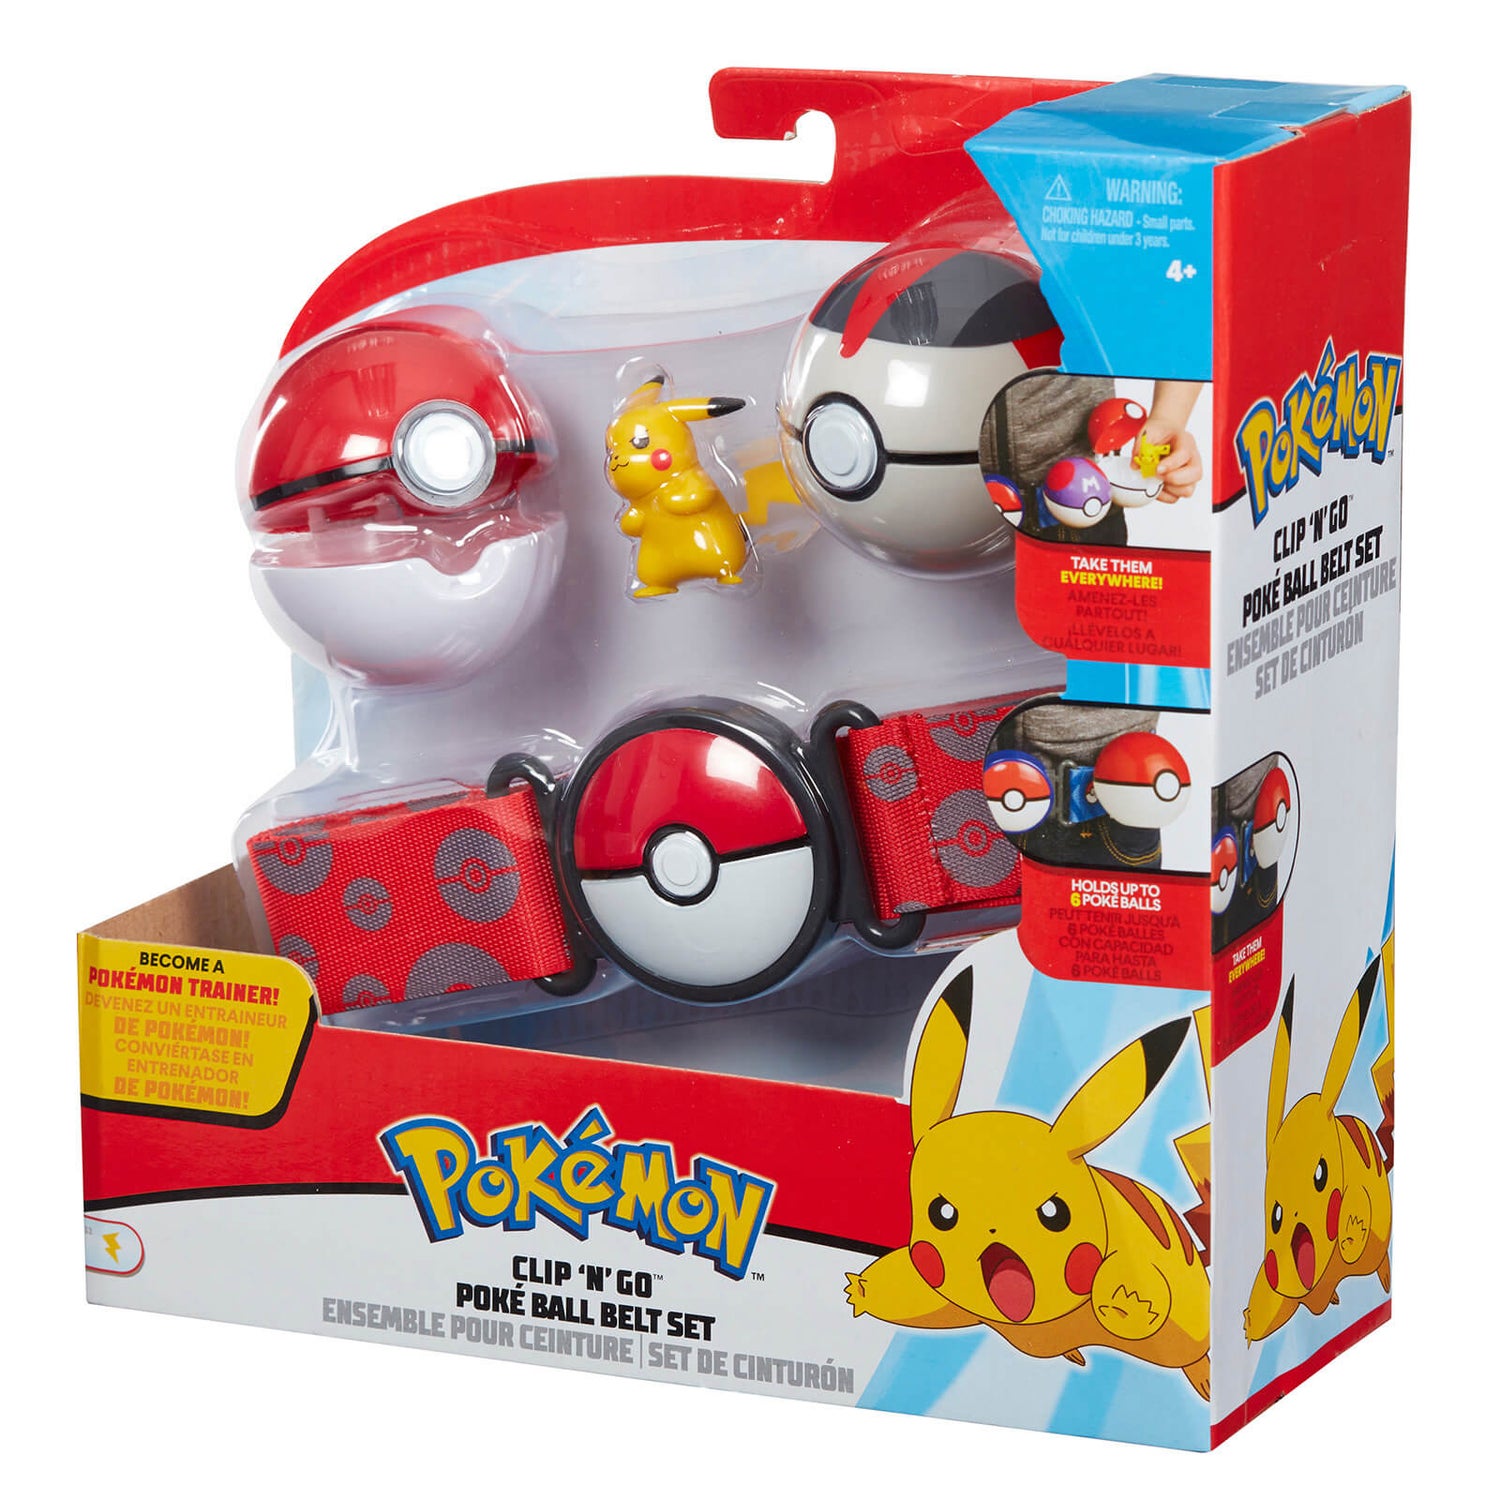 Pokémon set ceinture Clip 'N' Go Pikachu Poke Ball